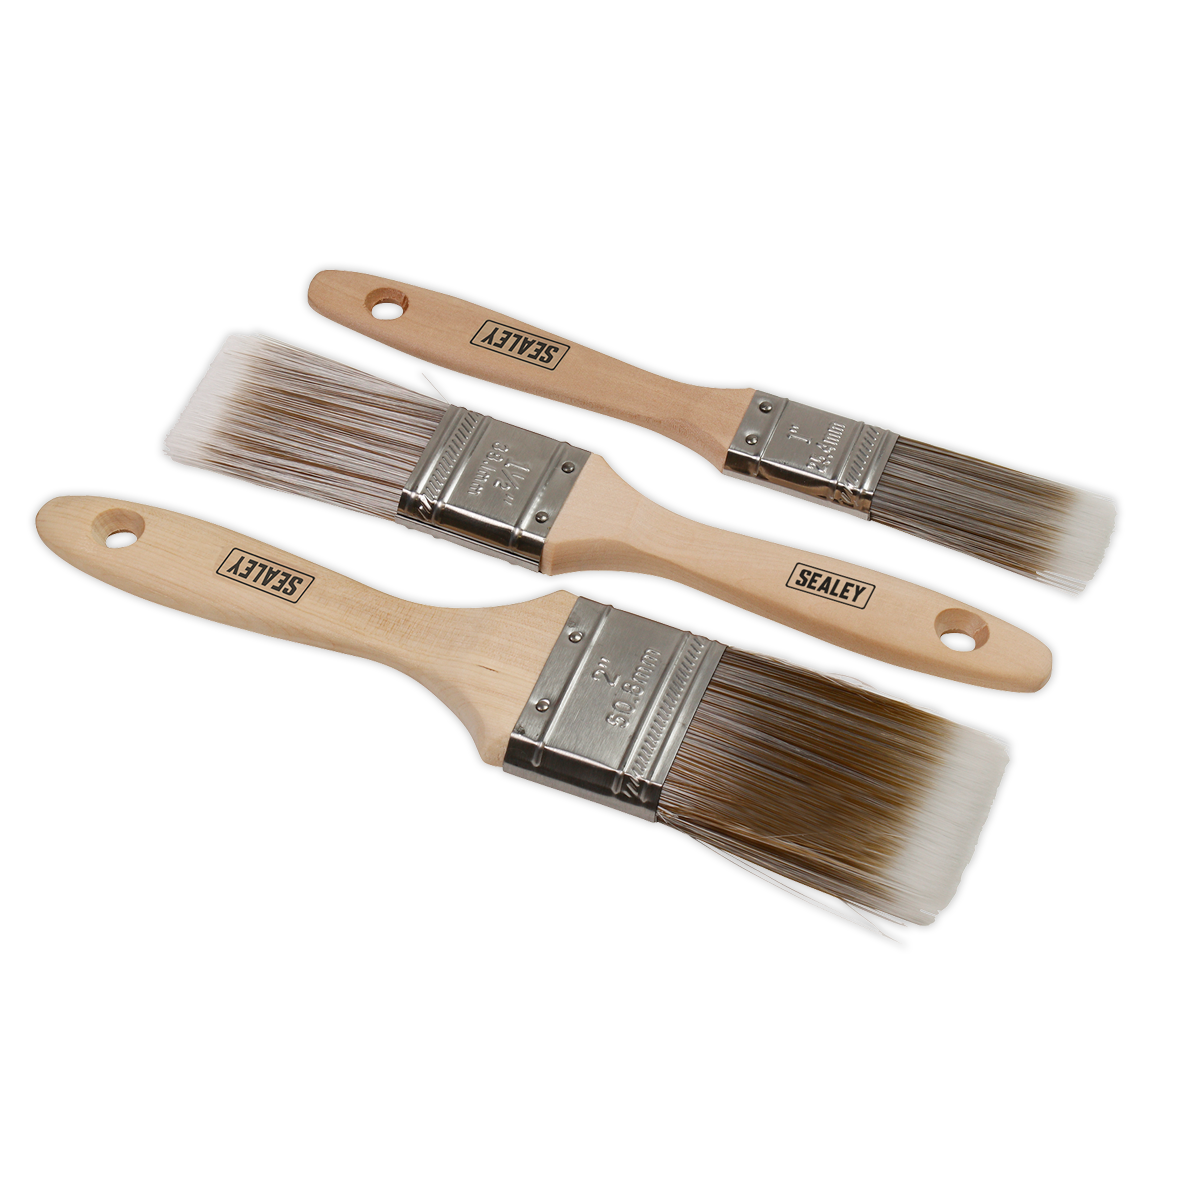 Sealey Wooden Handle Paint Brush Set 3pc